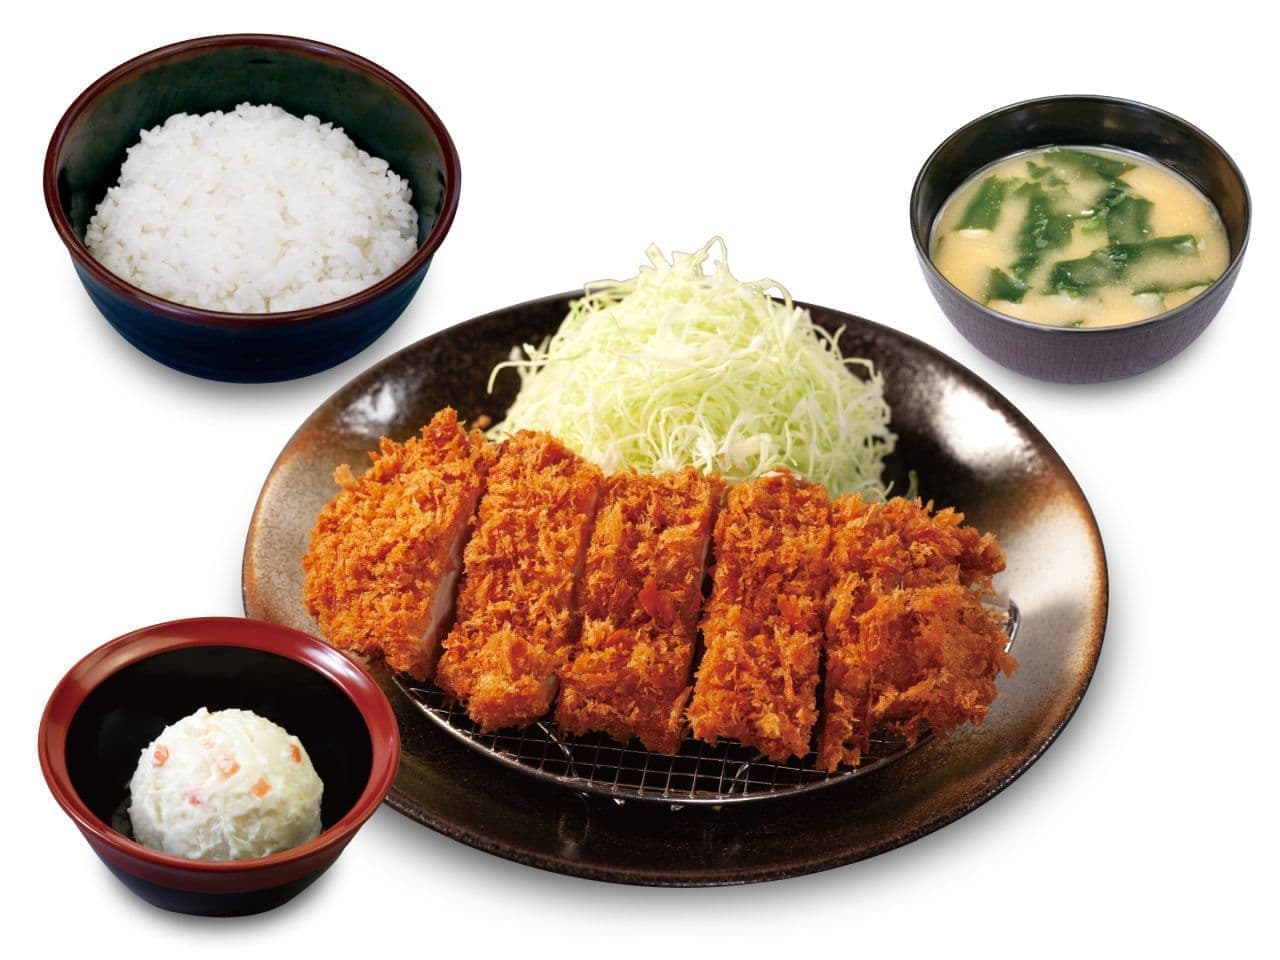 Matsunoya "Chicken Katsu Set Meal Topped with Potato Salad